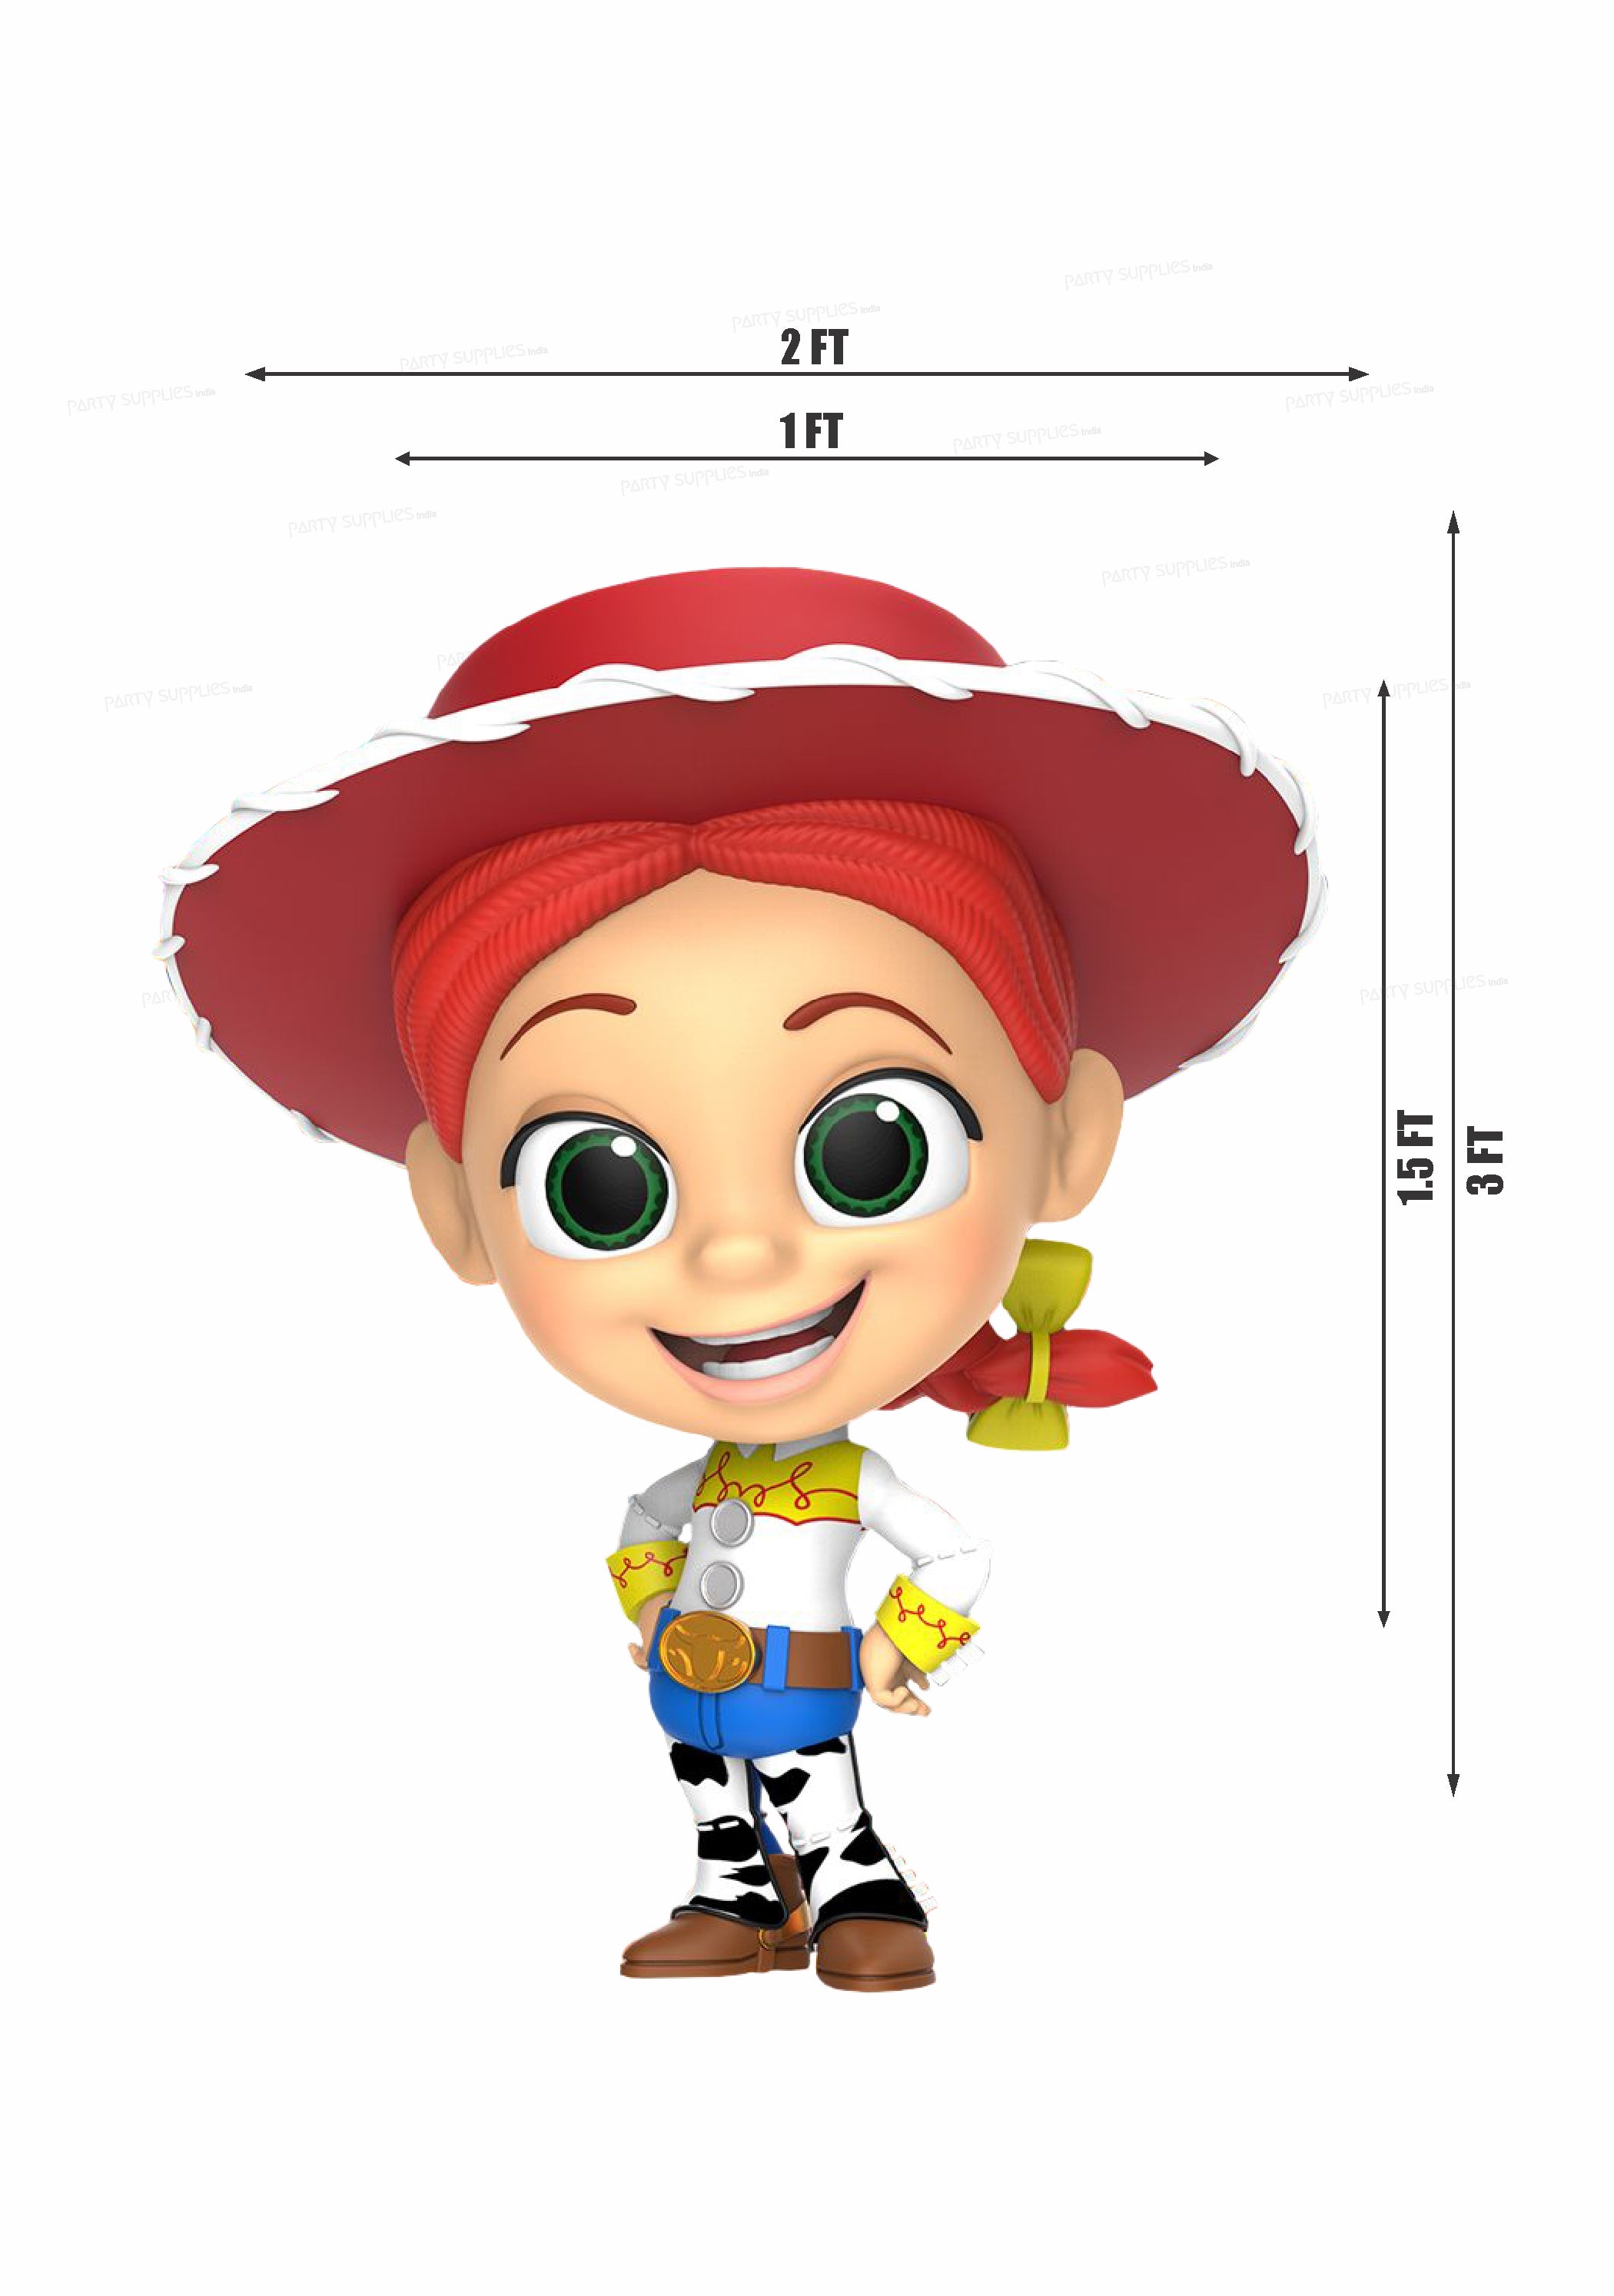 PSI Toy Story Theme Cutout - 08